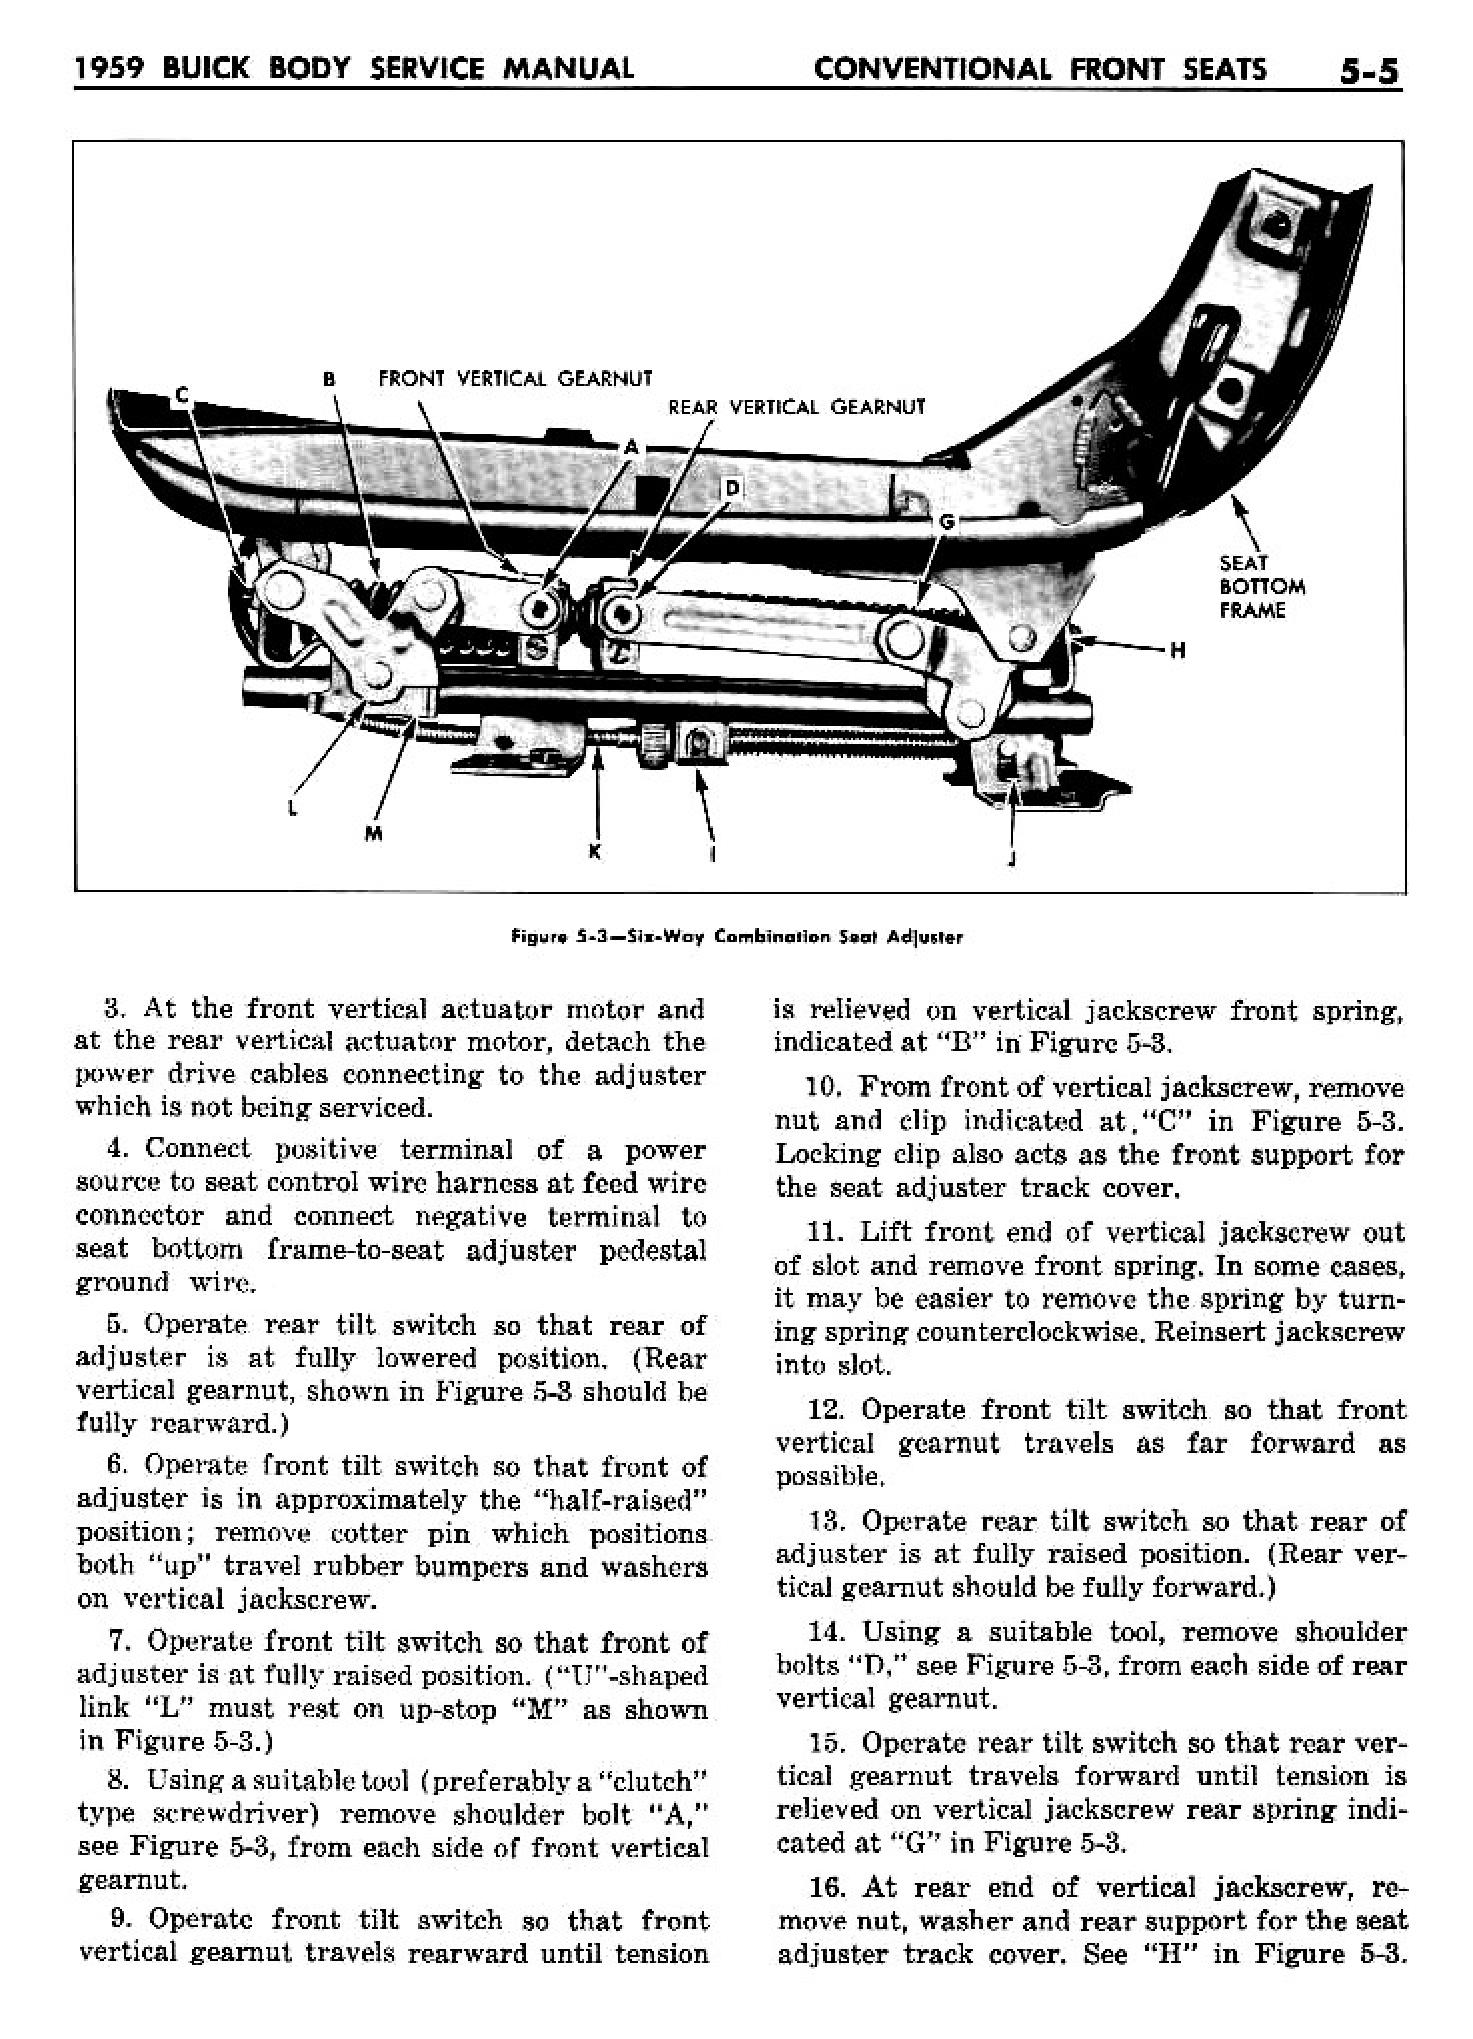 n_06 1959 Buick Body Service-Seats_5.jpg